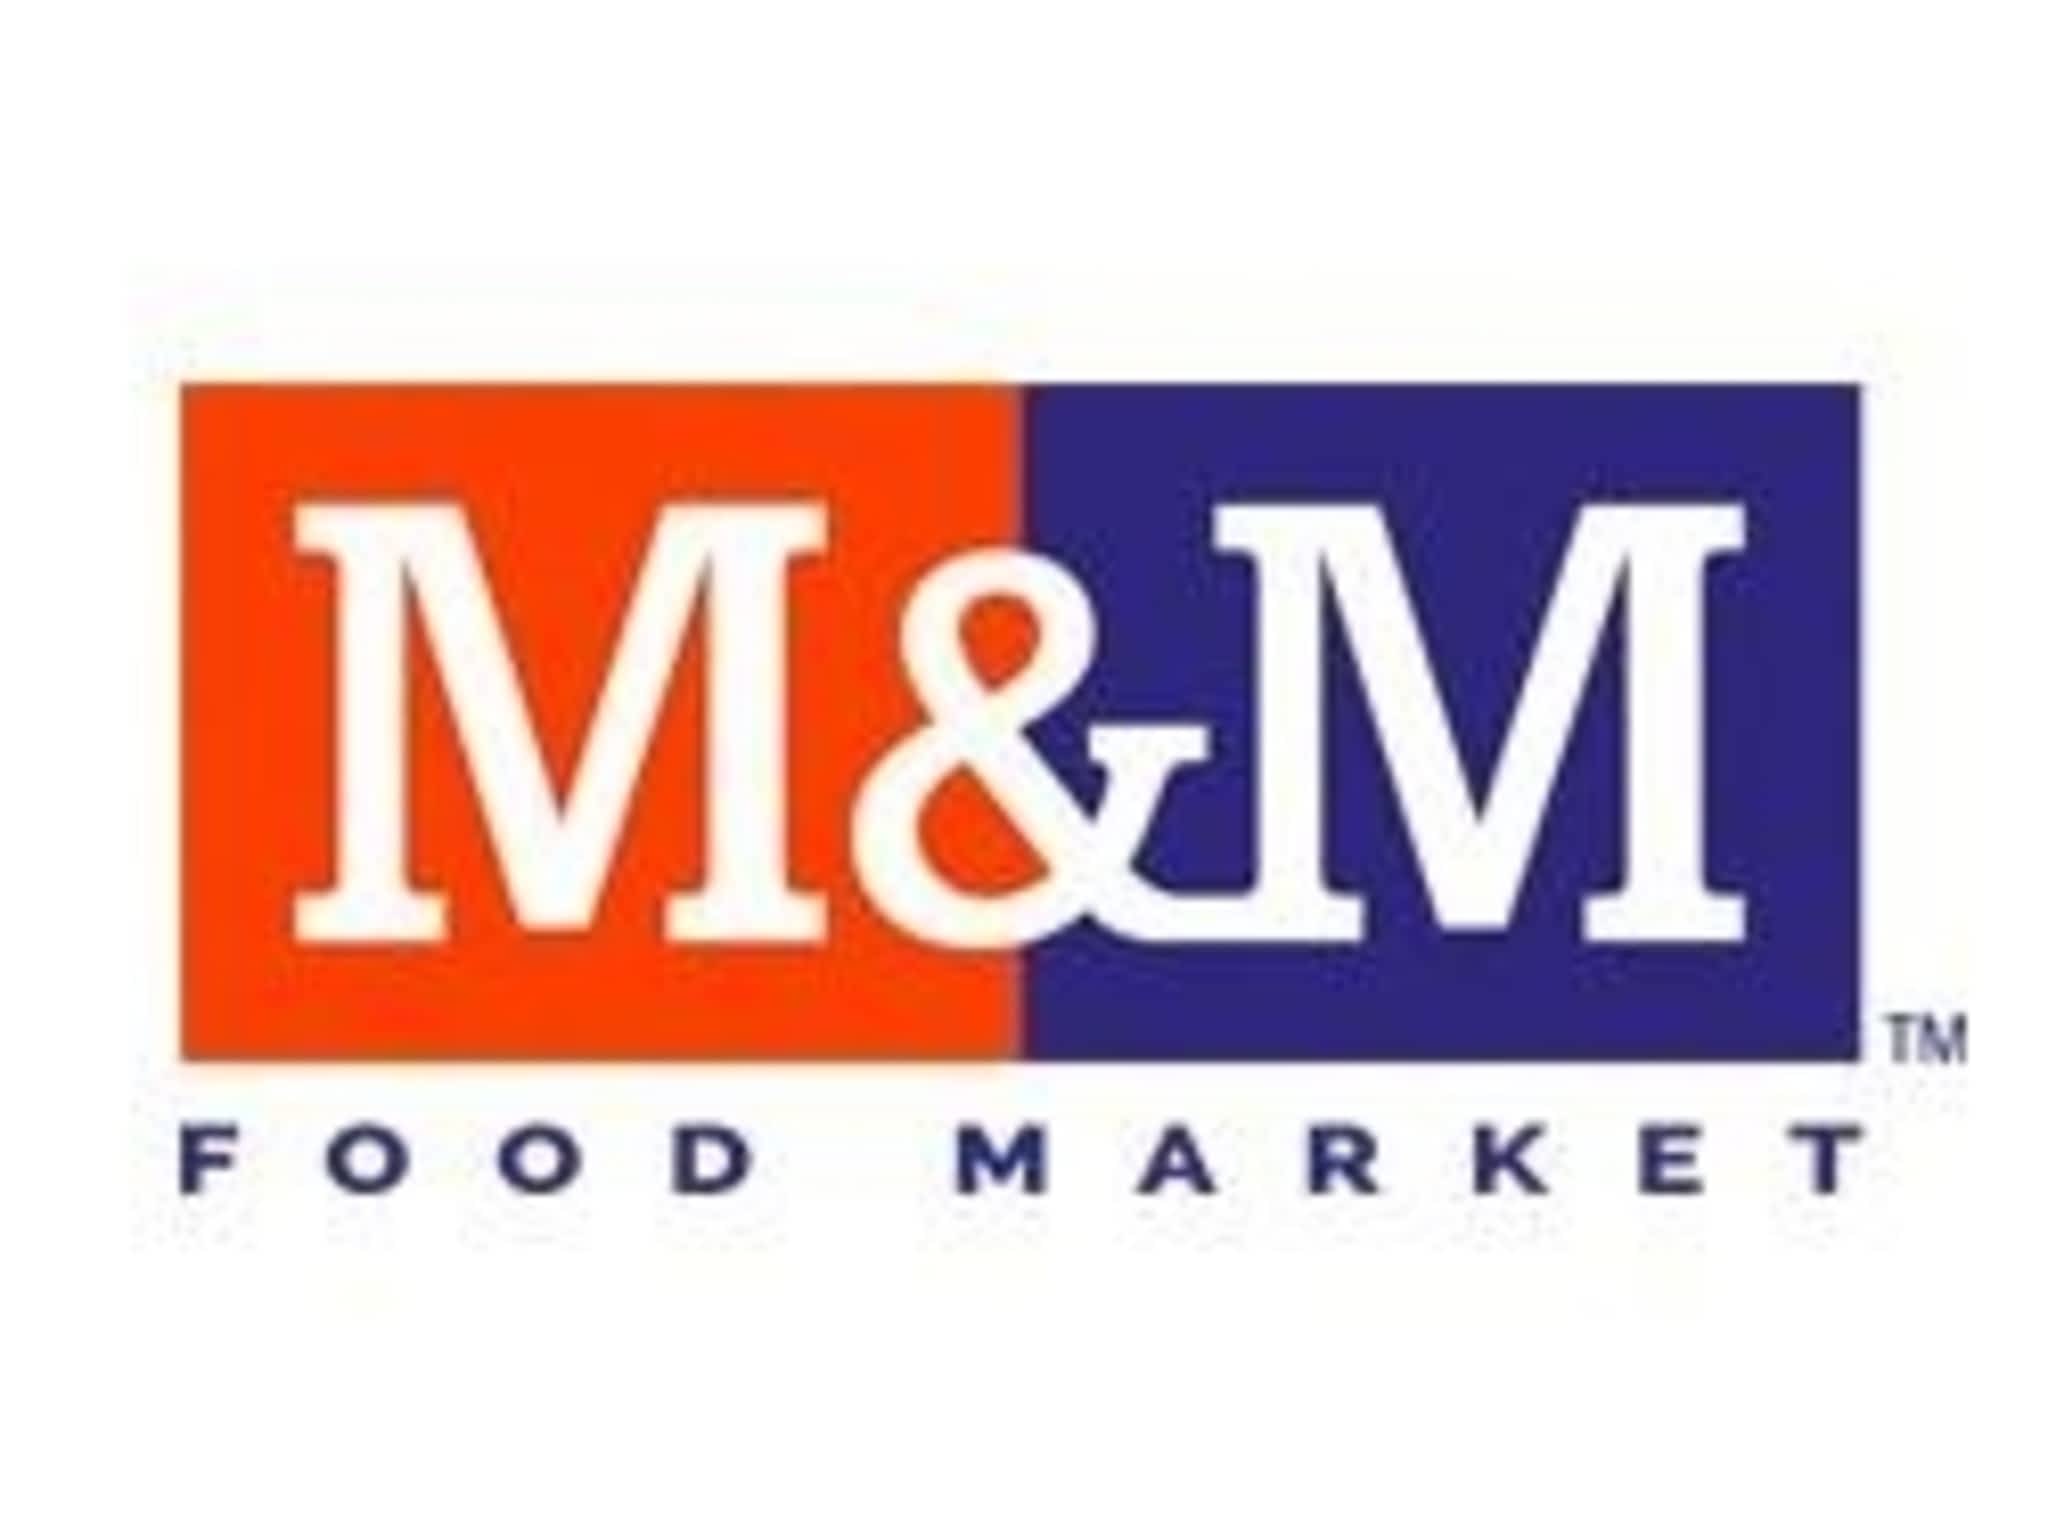 photo M&M Food Market